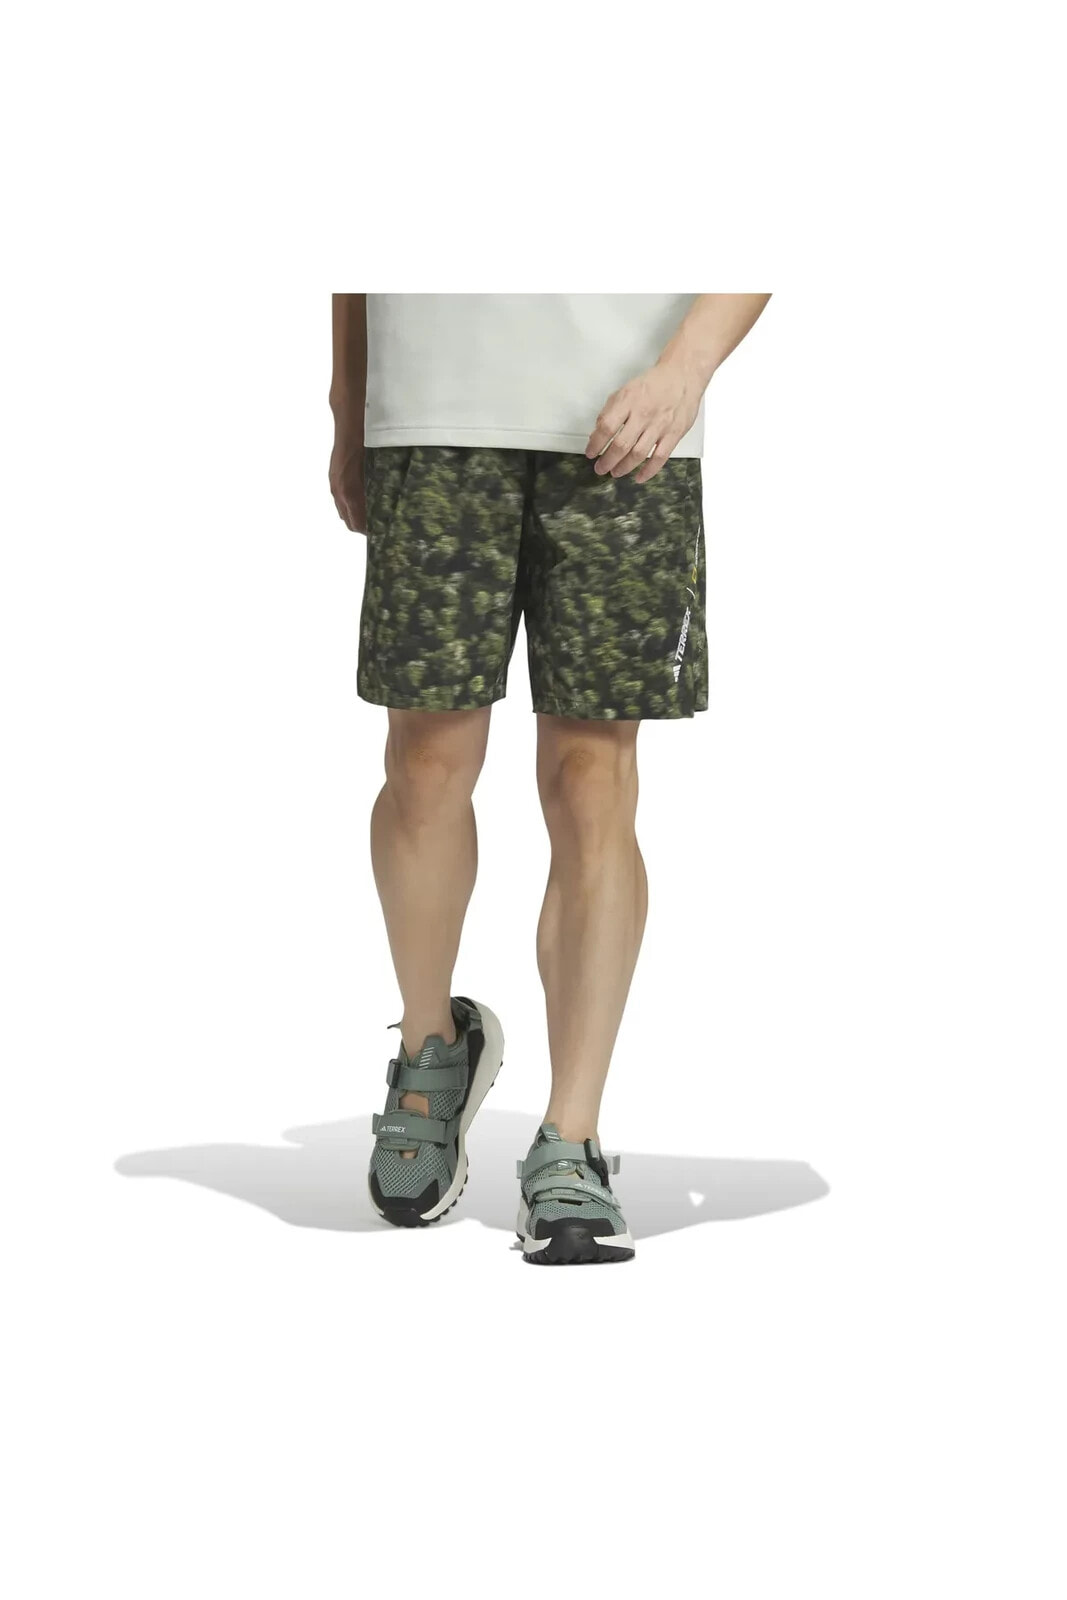 IS9516-E adidas Natgeo Shorts Erkek Şort Ve Kapri Yeşil